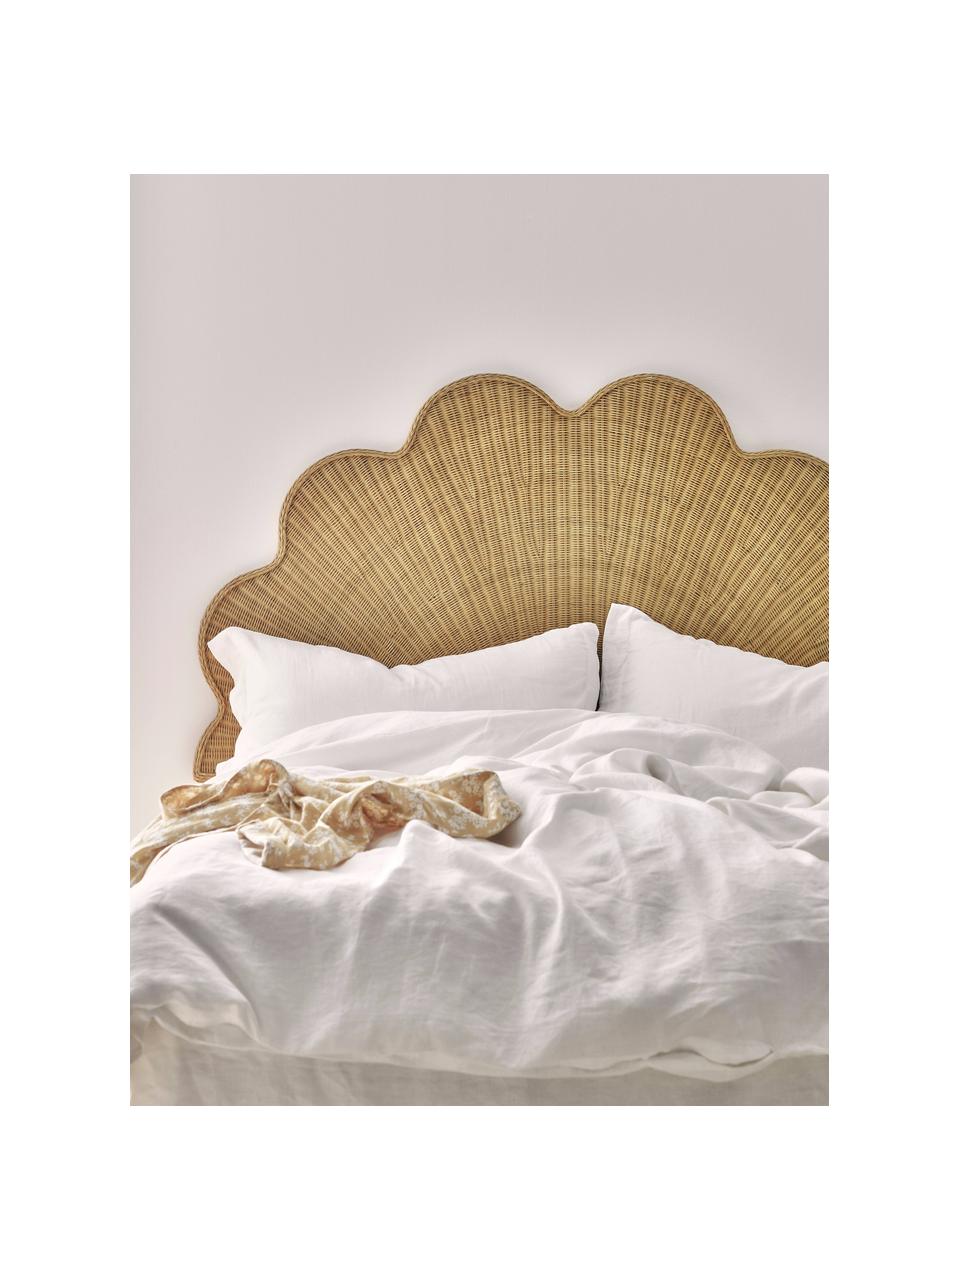 Tête de lit en rotin Shelly, Rotin, Beige, larg. 177 x haut. 94 cm